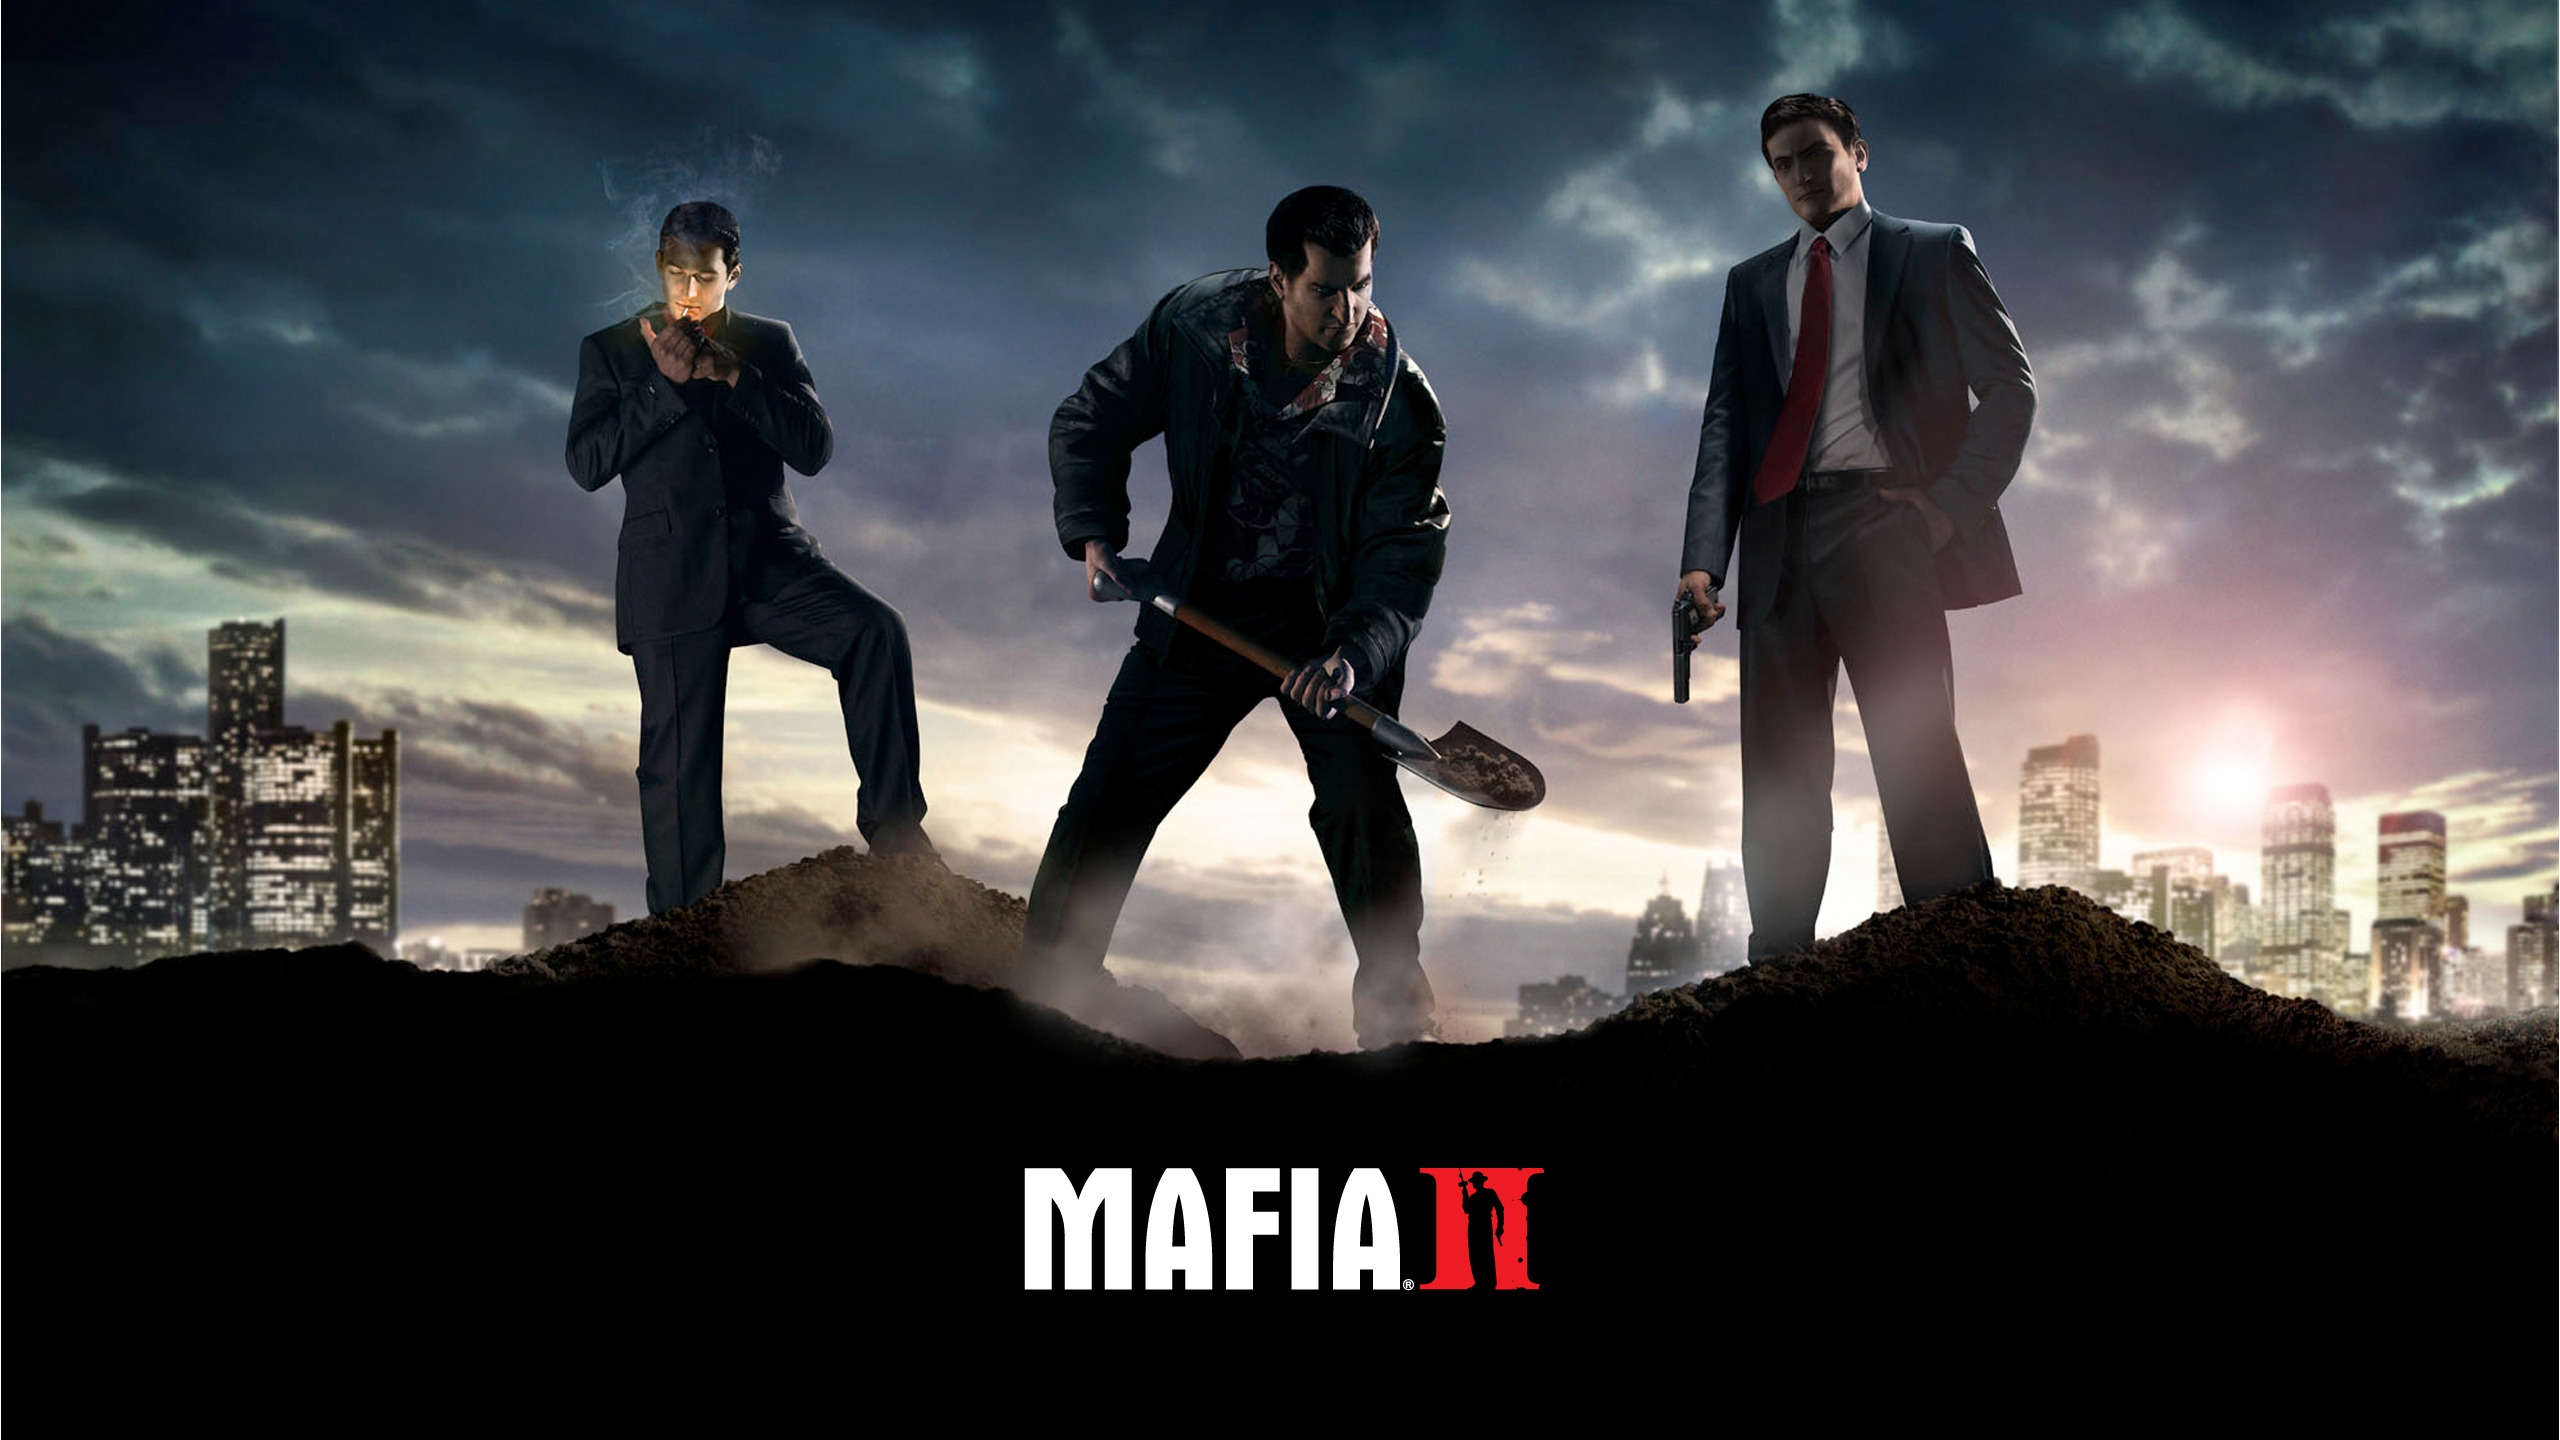 Mafia II for 2560x1440 HDTV resolution